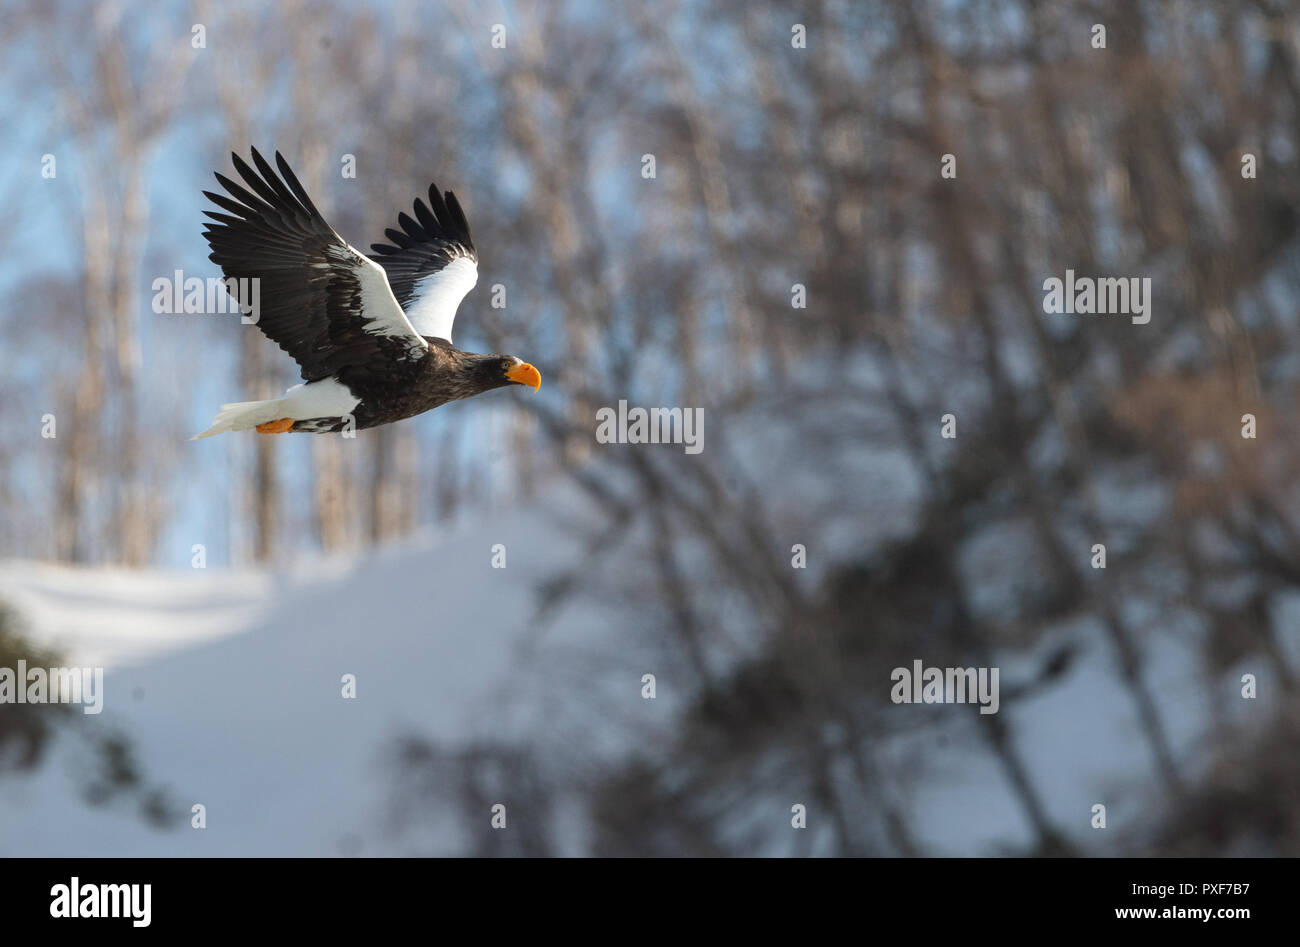 Adult Steller's sea eagle in flight. Snowy Mountain background. Scientific name: Haliaeetus pelagicus. Natural Habitat. Winter Season. Stock Photo